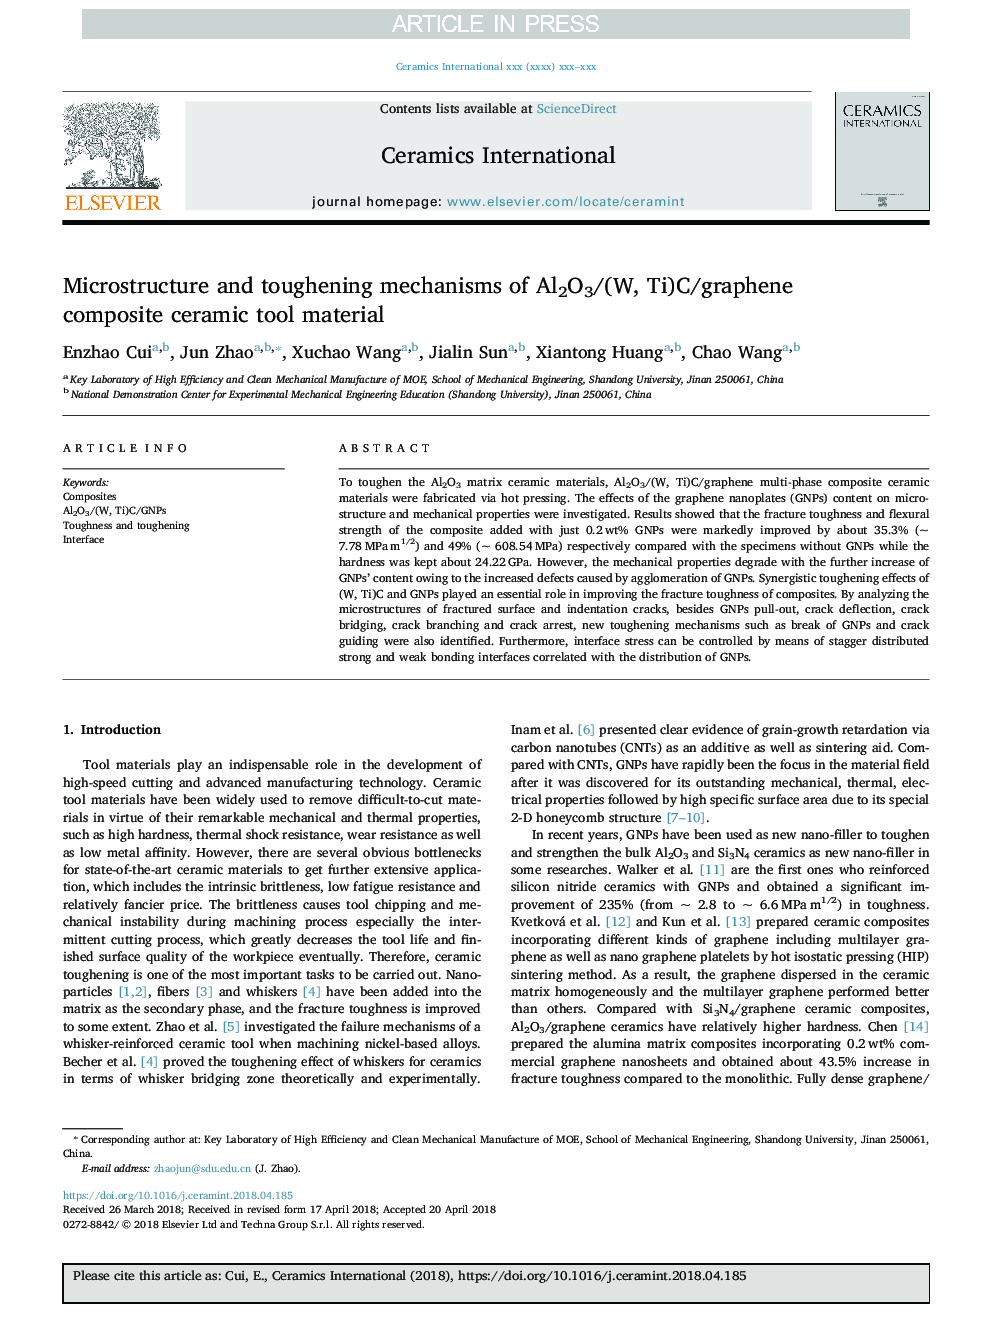 Microstructure and toughening mechanisms of Al2O3/(W, Ti)C/graphene composite ceramic tool material